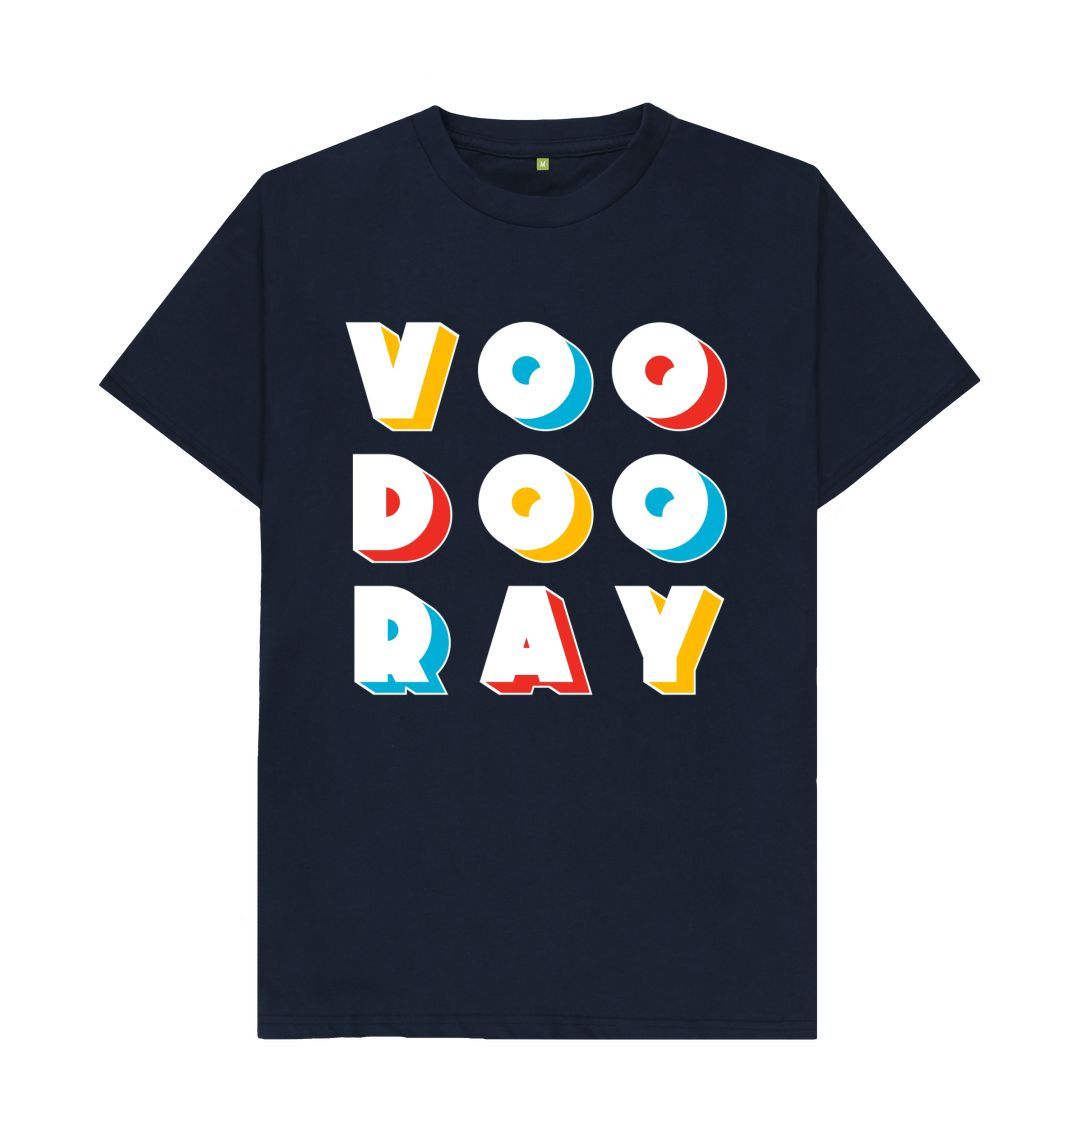 Navy Blue Voodoo T-Shirt